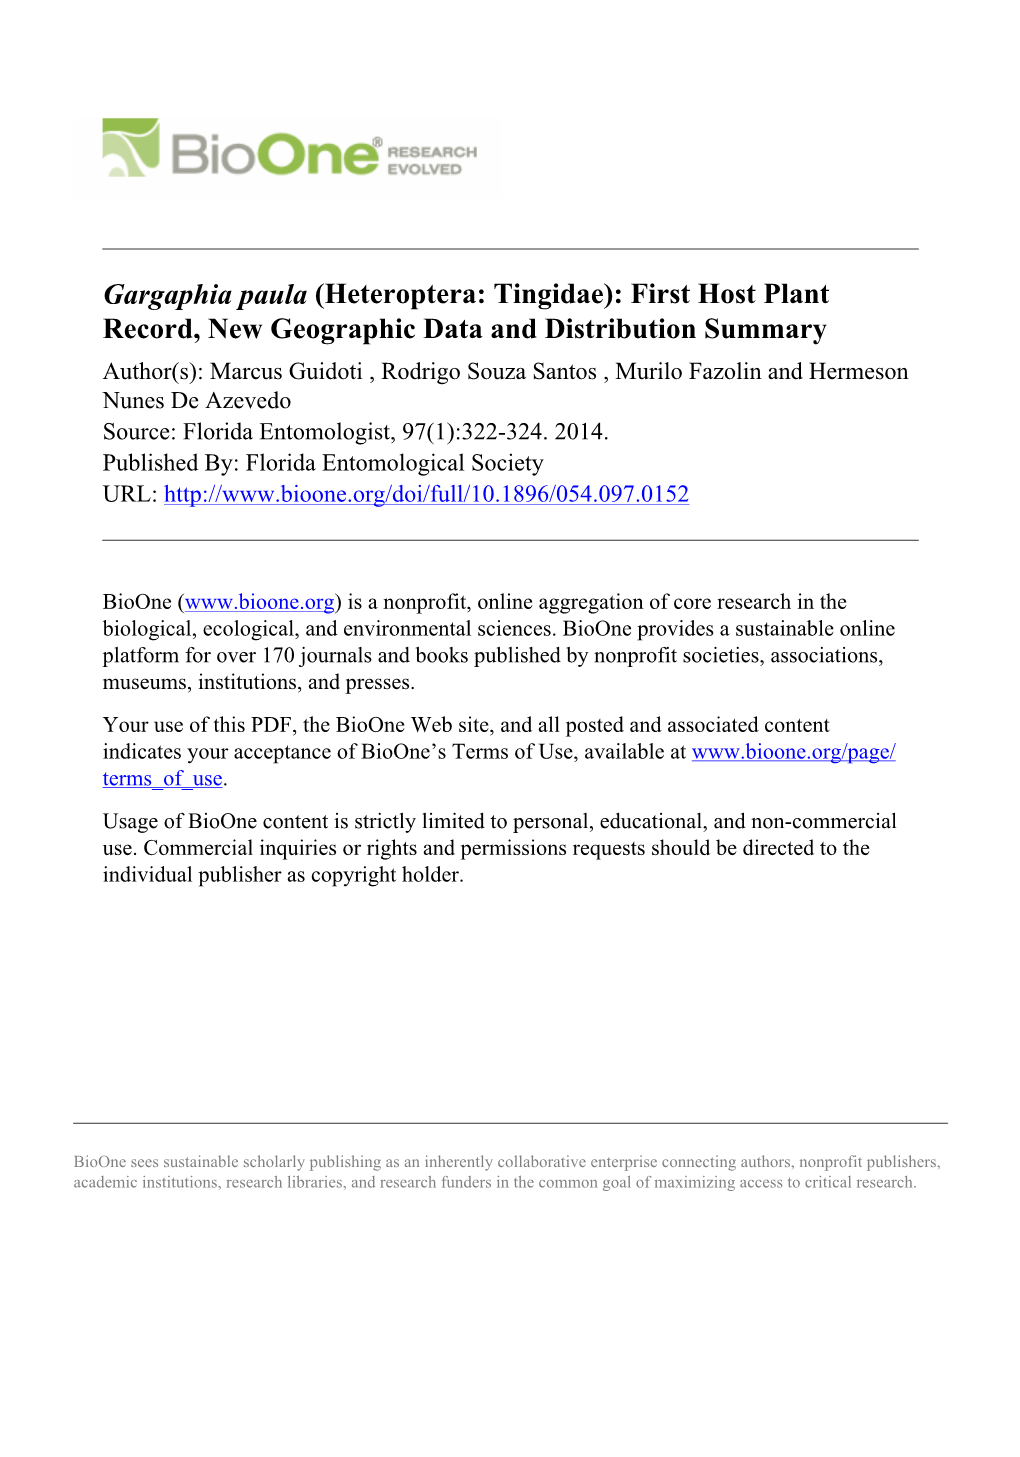 Gargaphia Paula (Heteroptera: Tingidae): First Host Plant Record, New Geographic Data and Distribution Summary